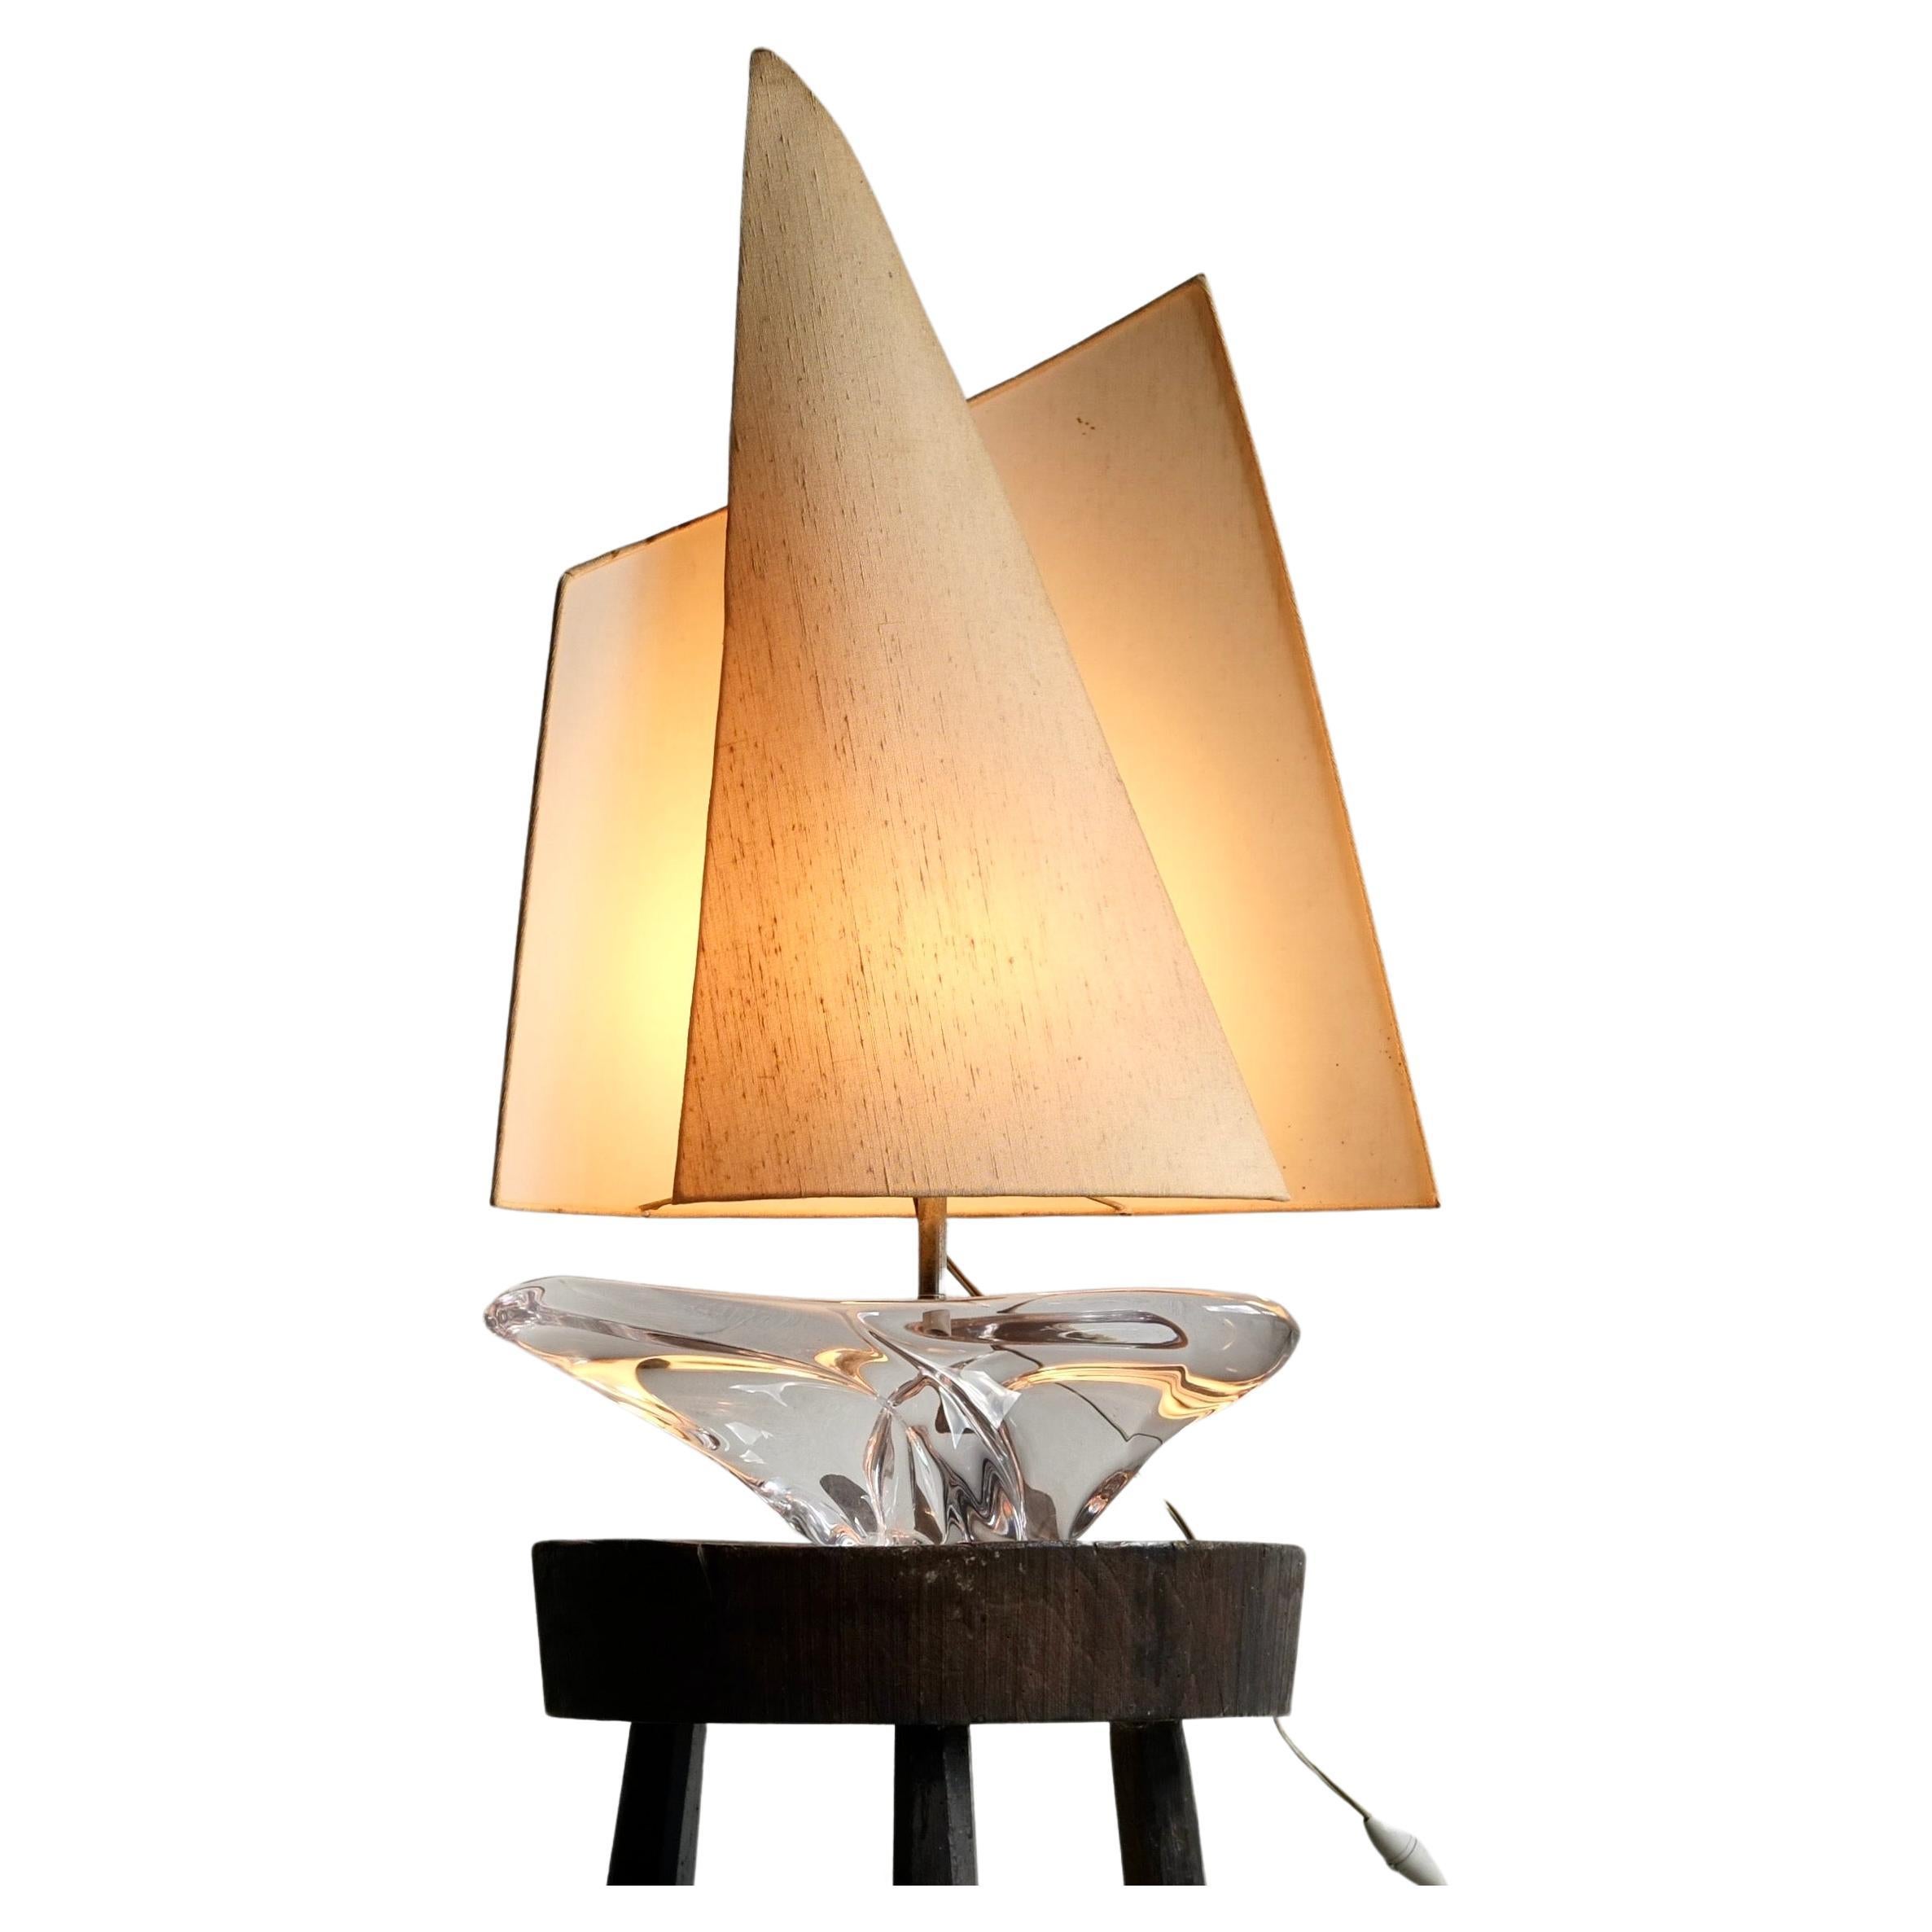 Daum Crystal Sailboat Lamp, 1960's, France For Sale